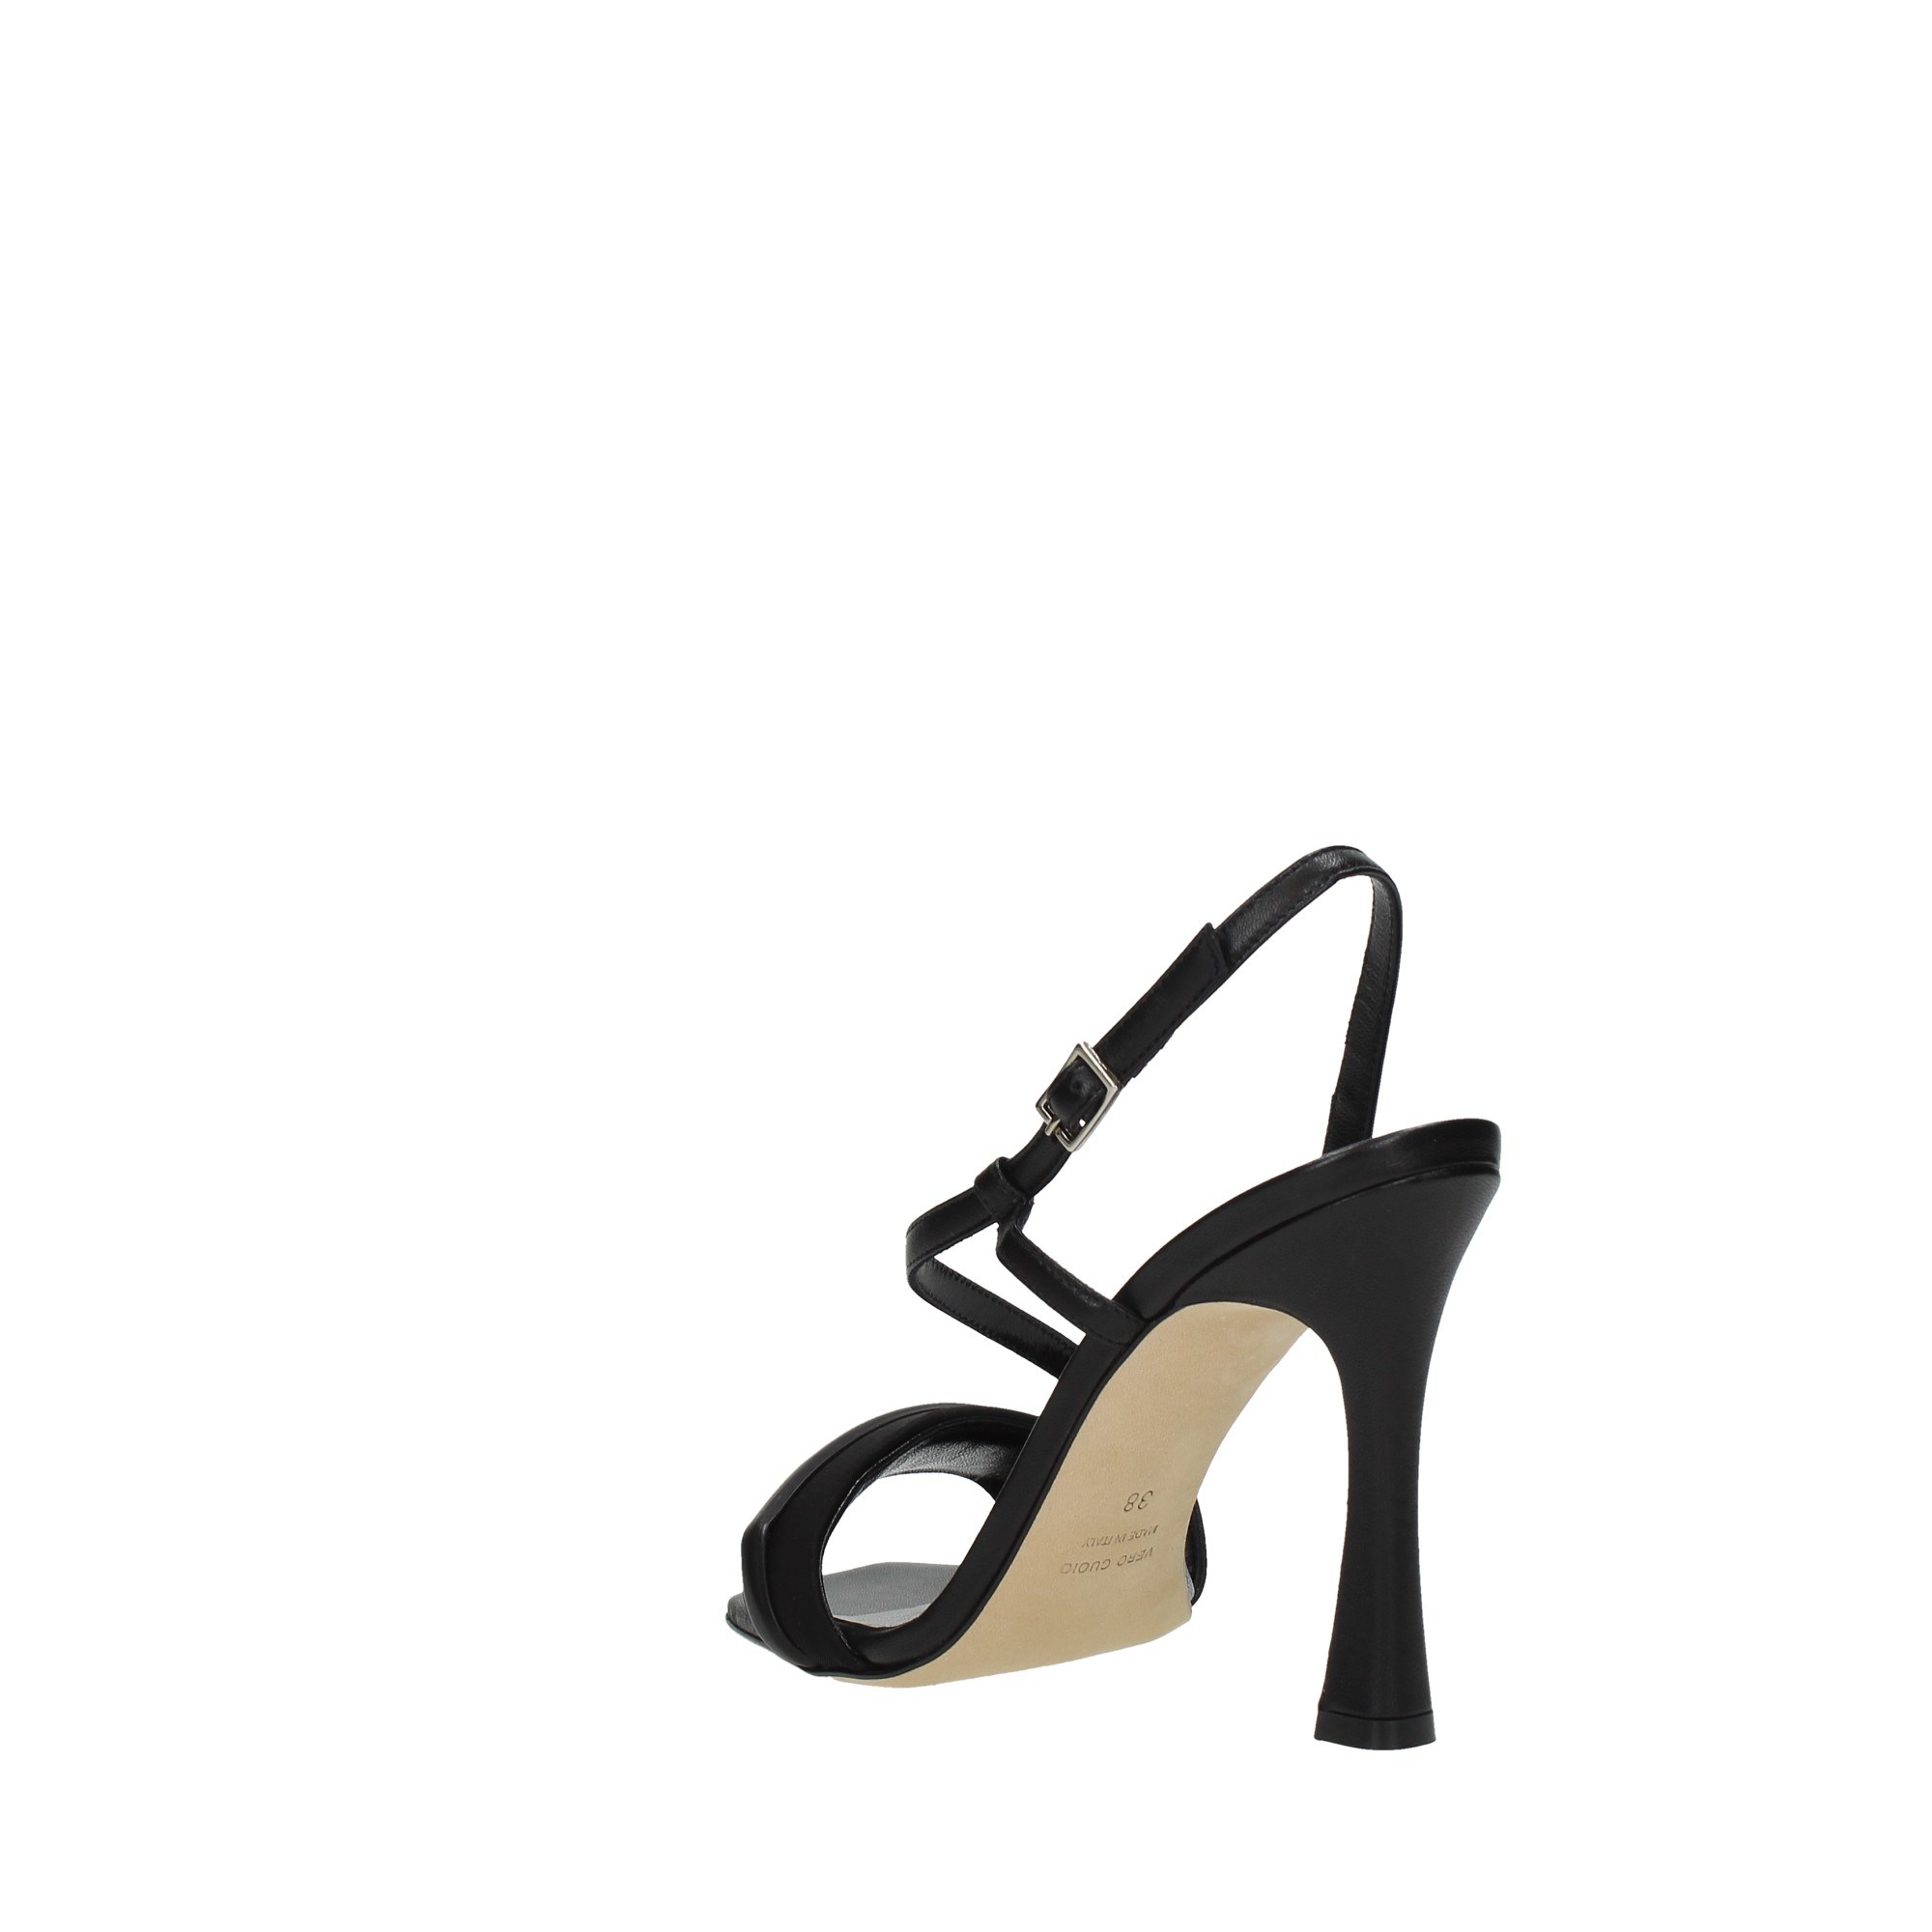 Lella Baldi Shoes Women Sandals 535